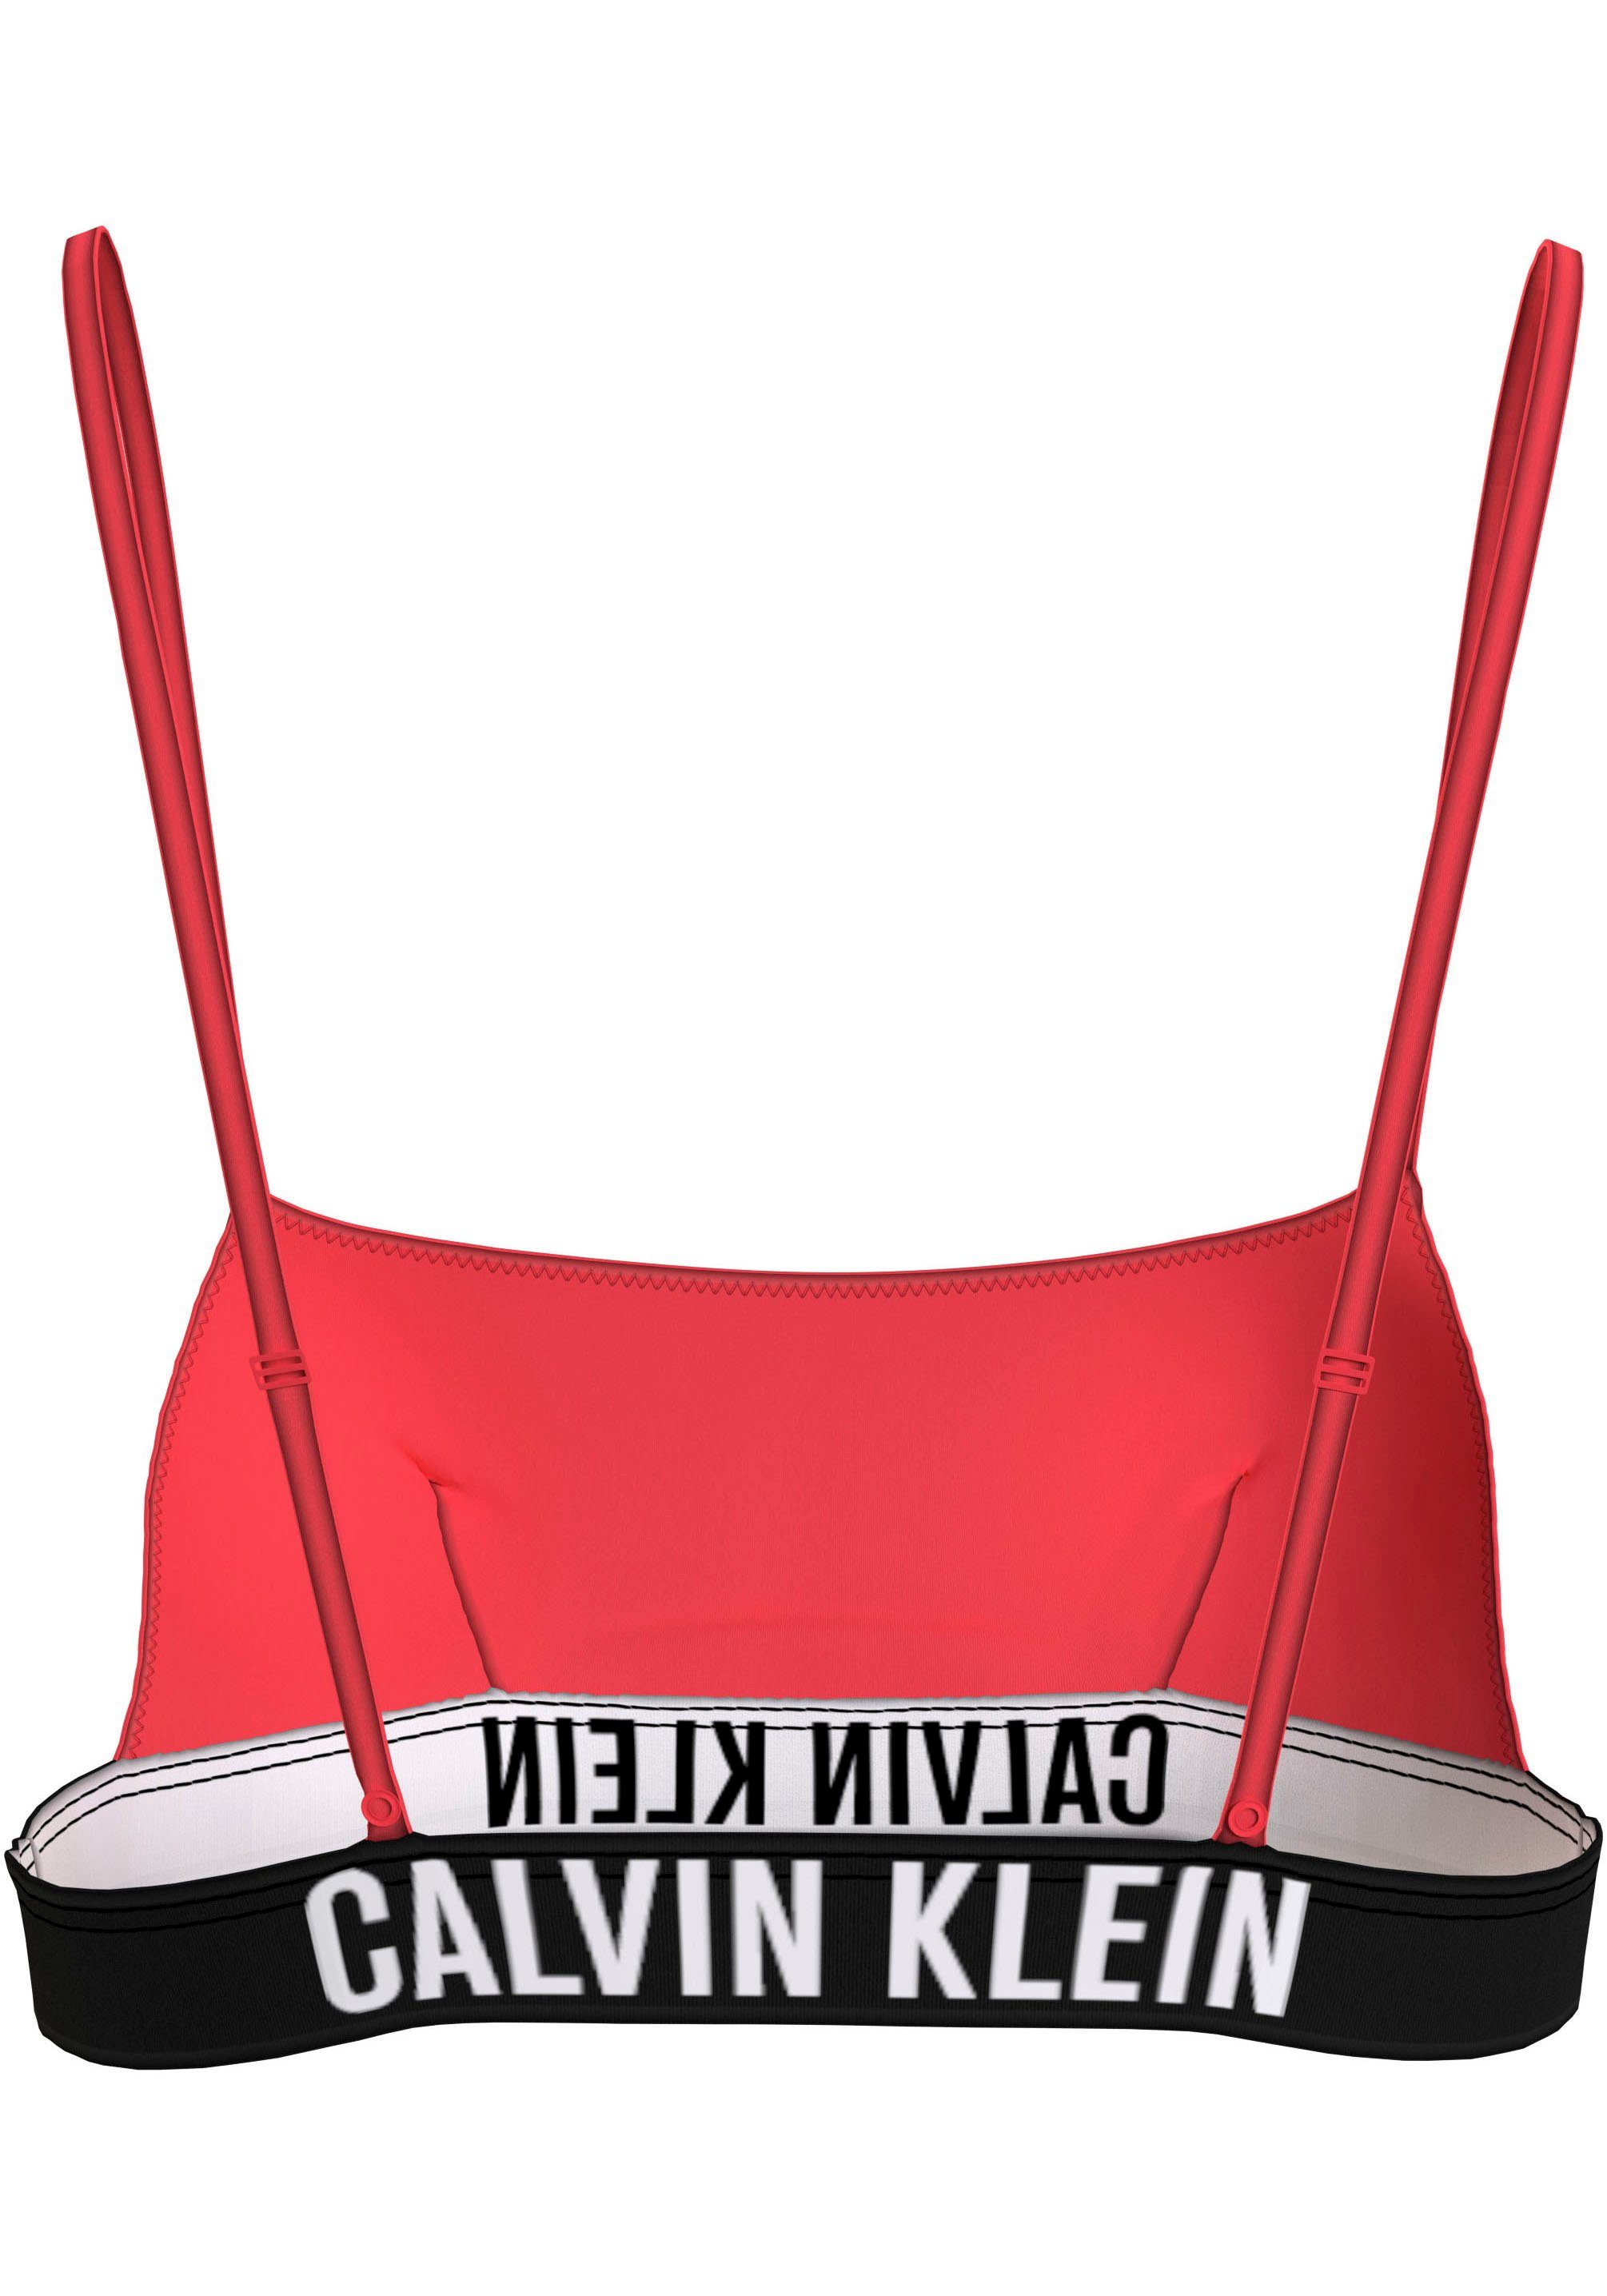 Calvin Klein mit BRALETTE-RP, Bandeau-Bikini-Top Swimwear Logobund